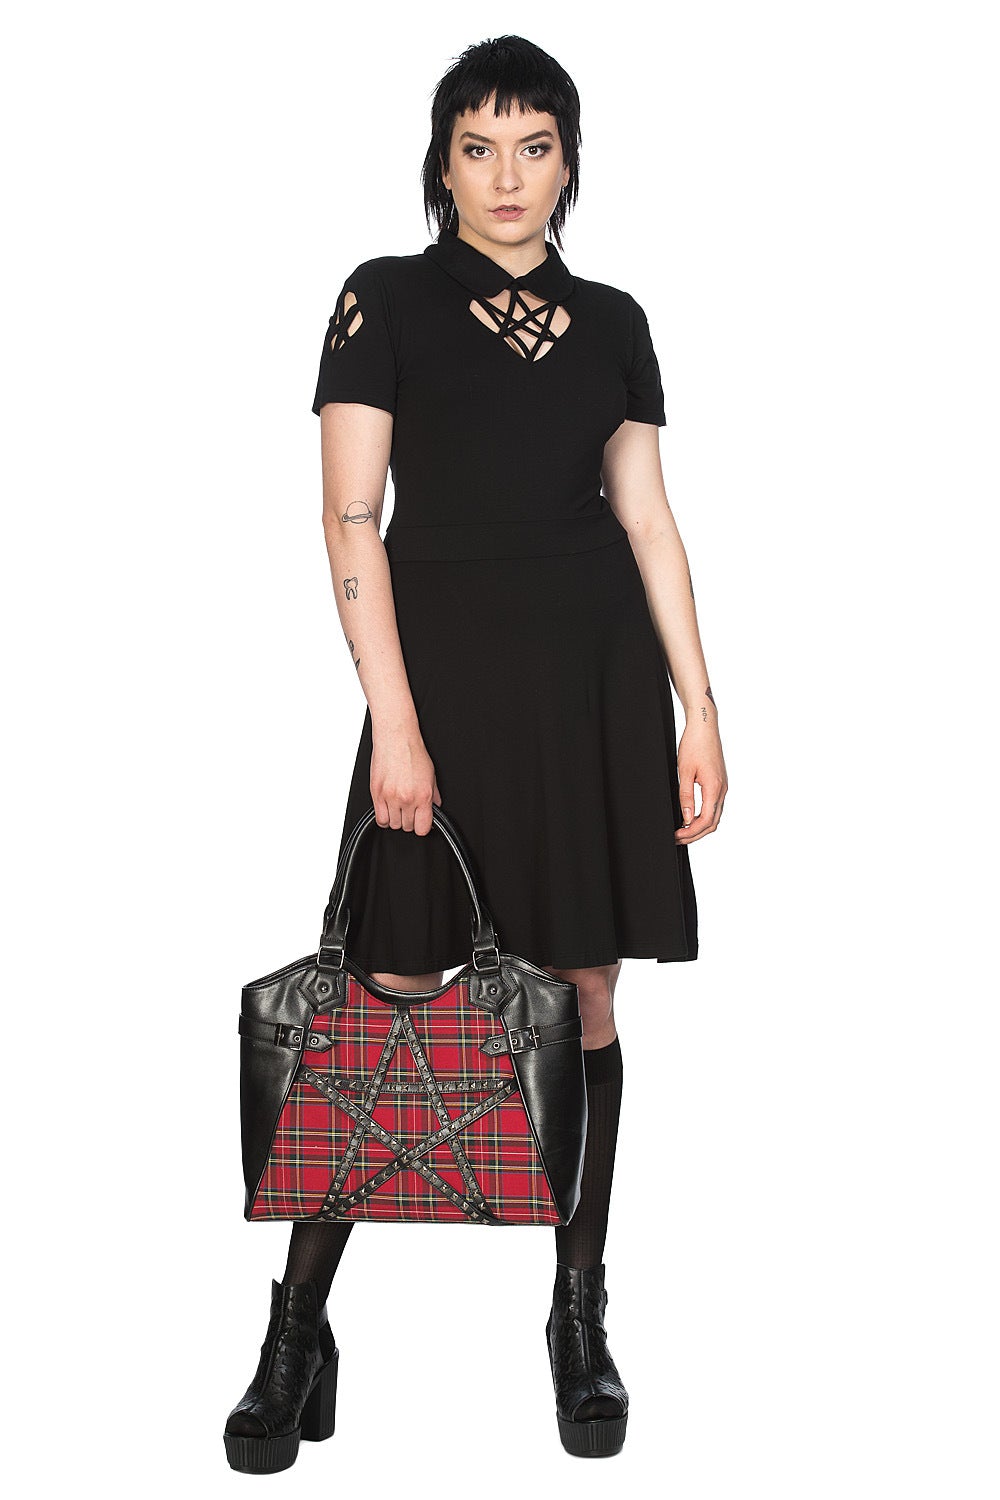 Alternative model holding a red tartan handbag with studded pentagram feature.